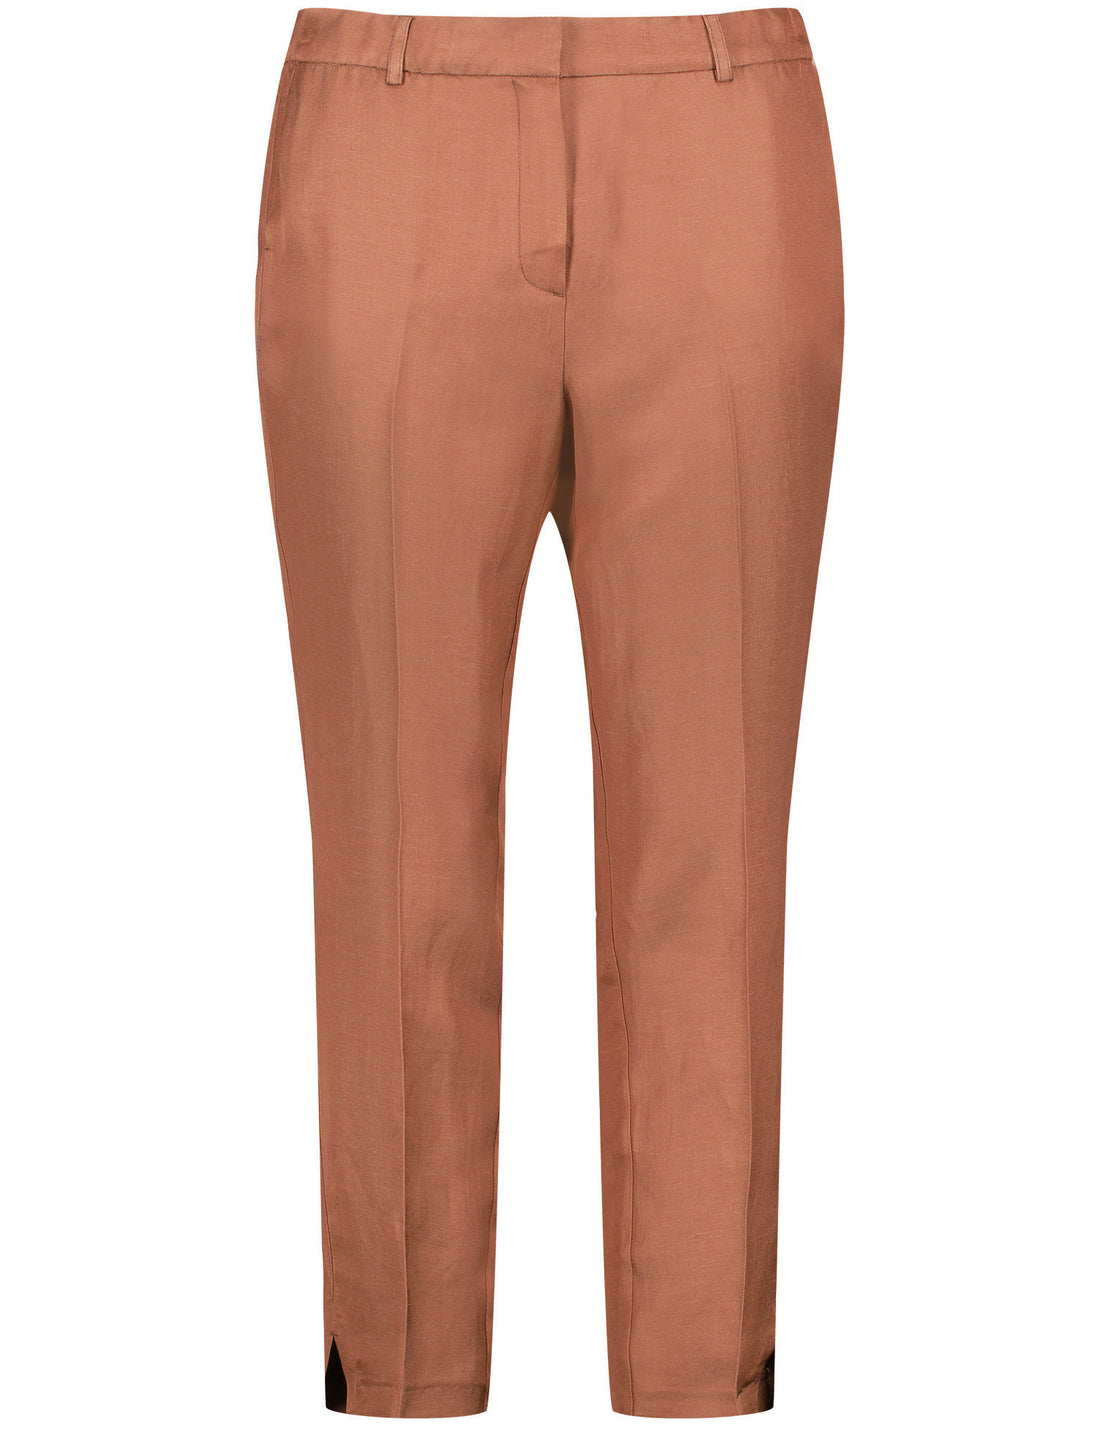 7/8 Length Linen Blend Trousers, Greta_320205-21302_7360_01